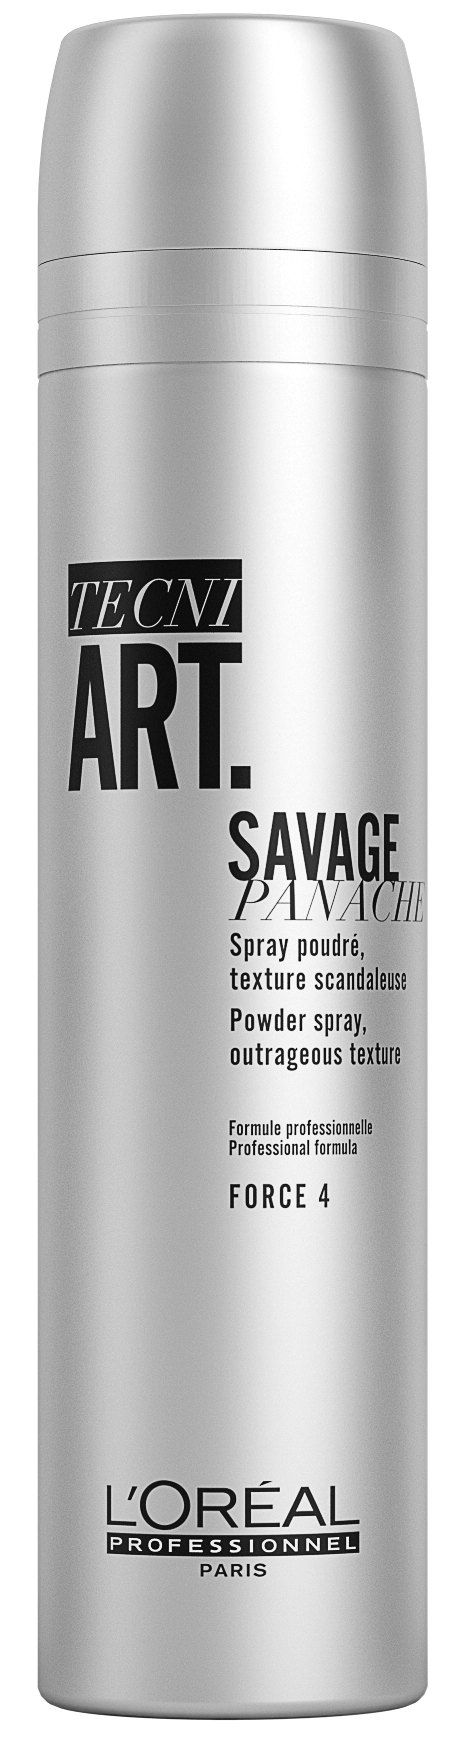 Tecni art Savage Panache Spray, 250 ml